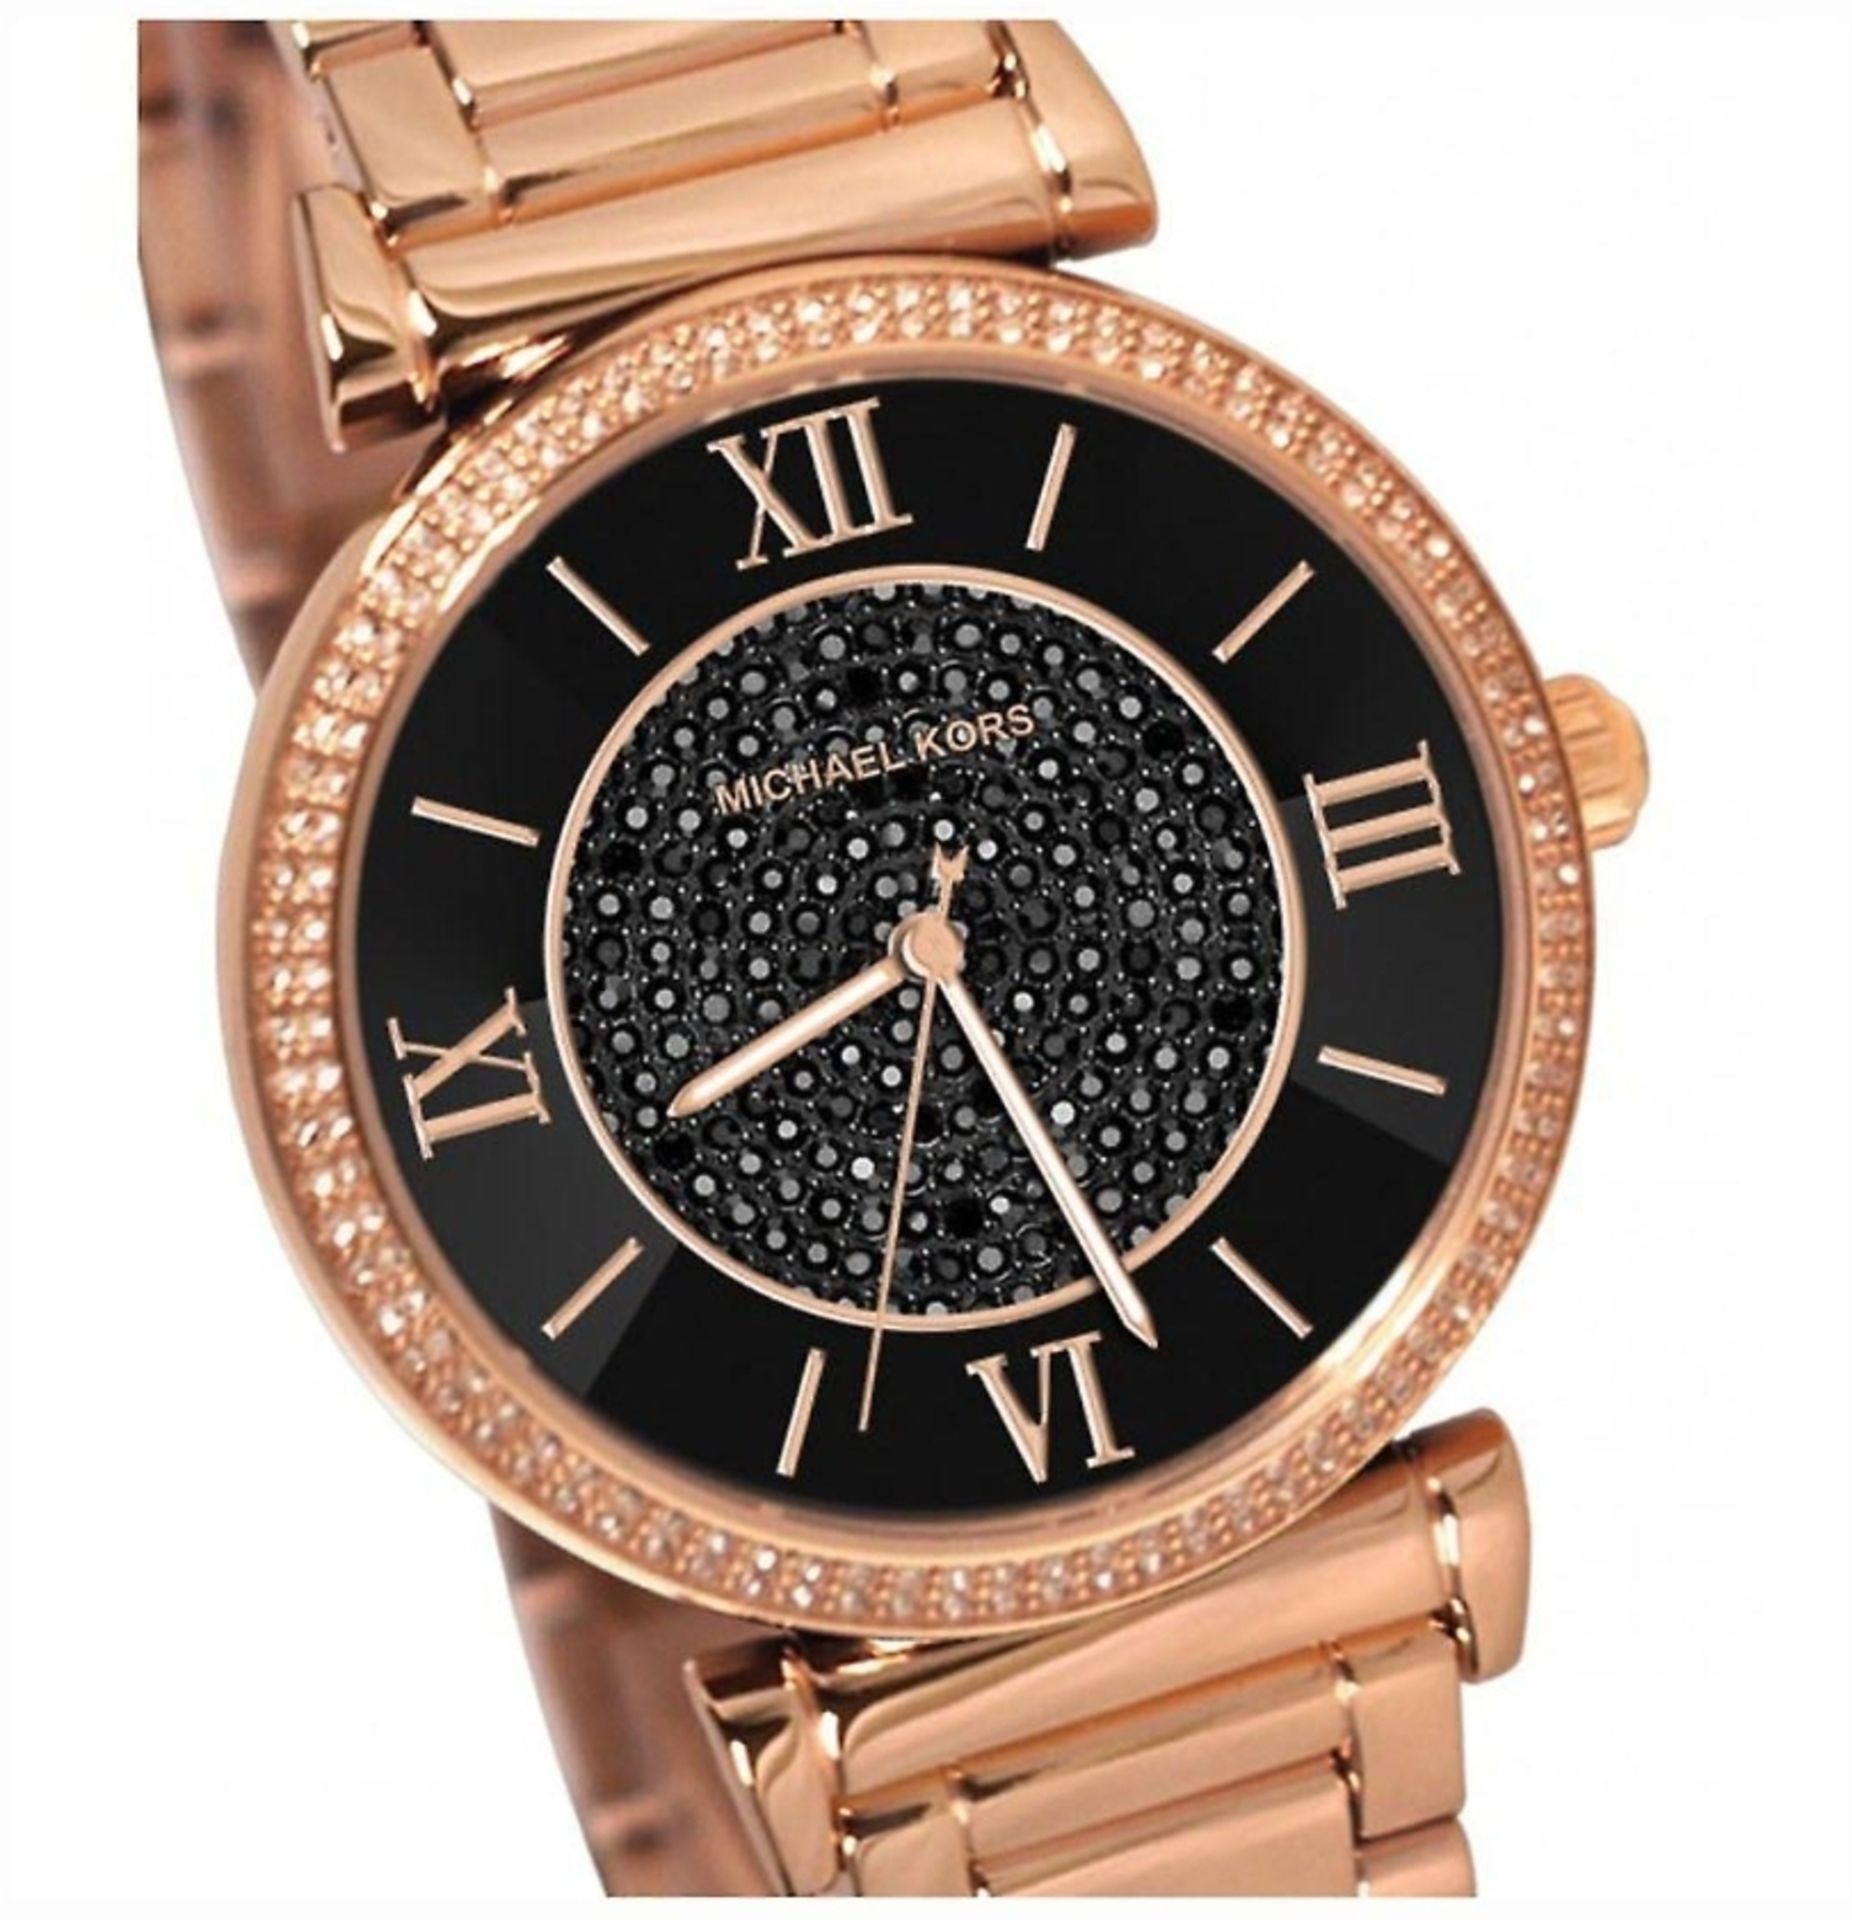 Michael Kors MK3356 Ladies Catlin Rose Gold Quartz Watch - Image 2 of 6